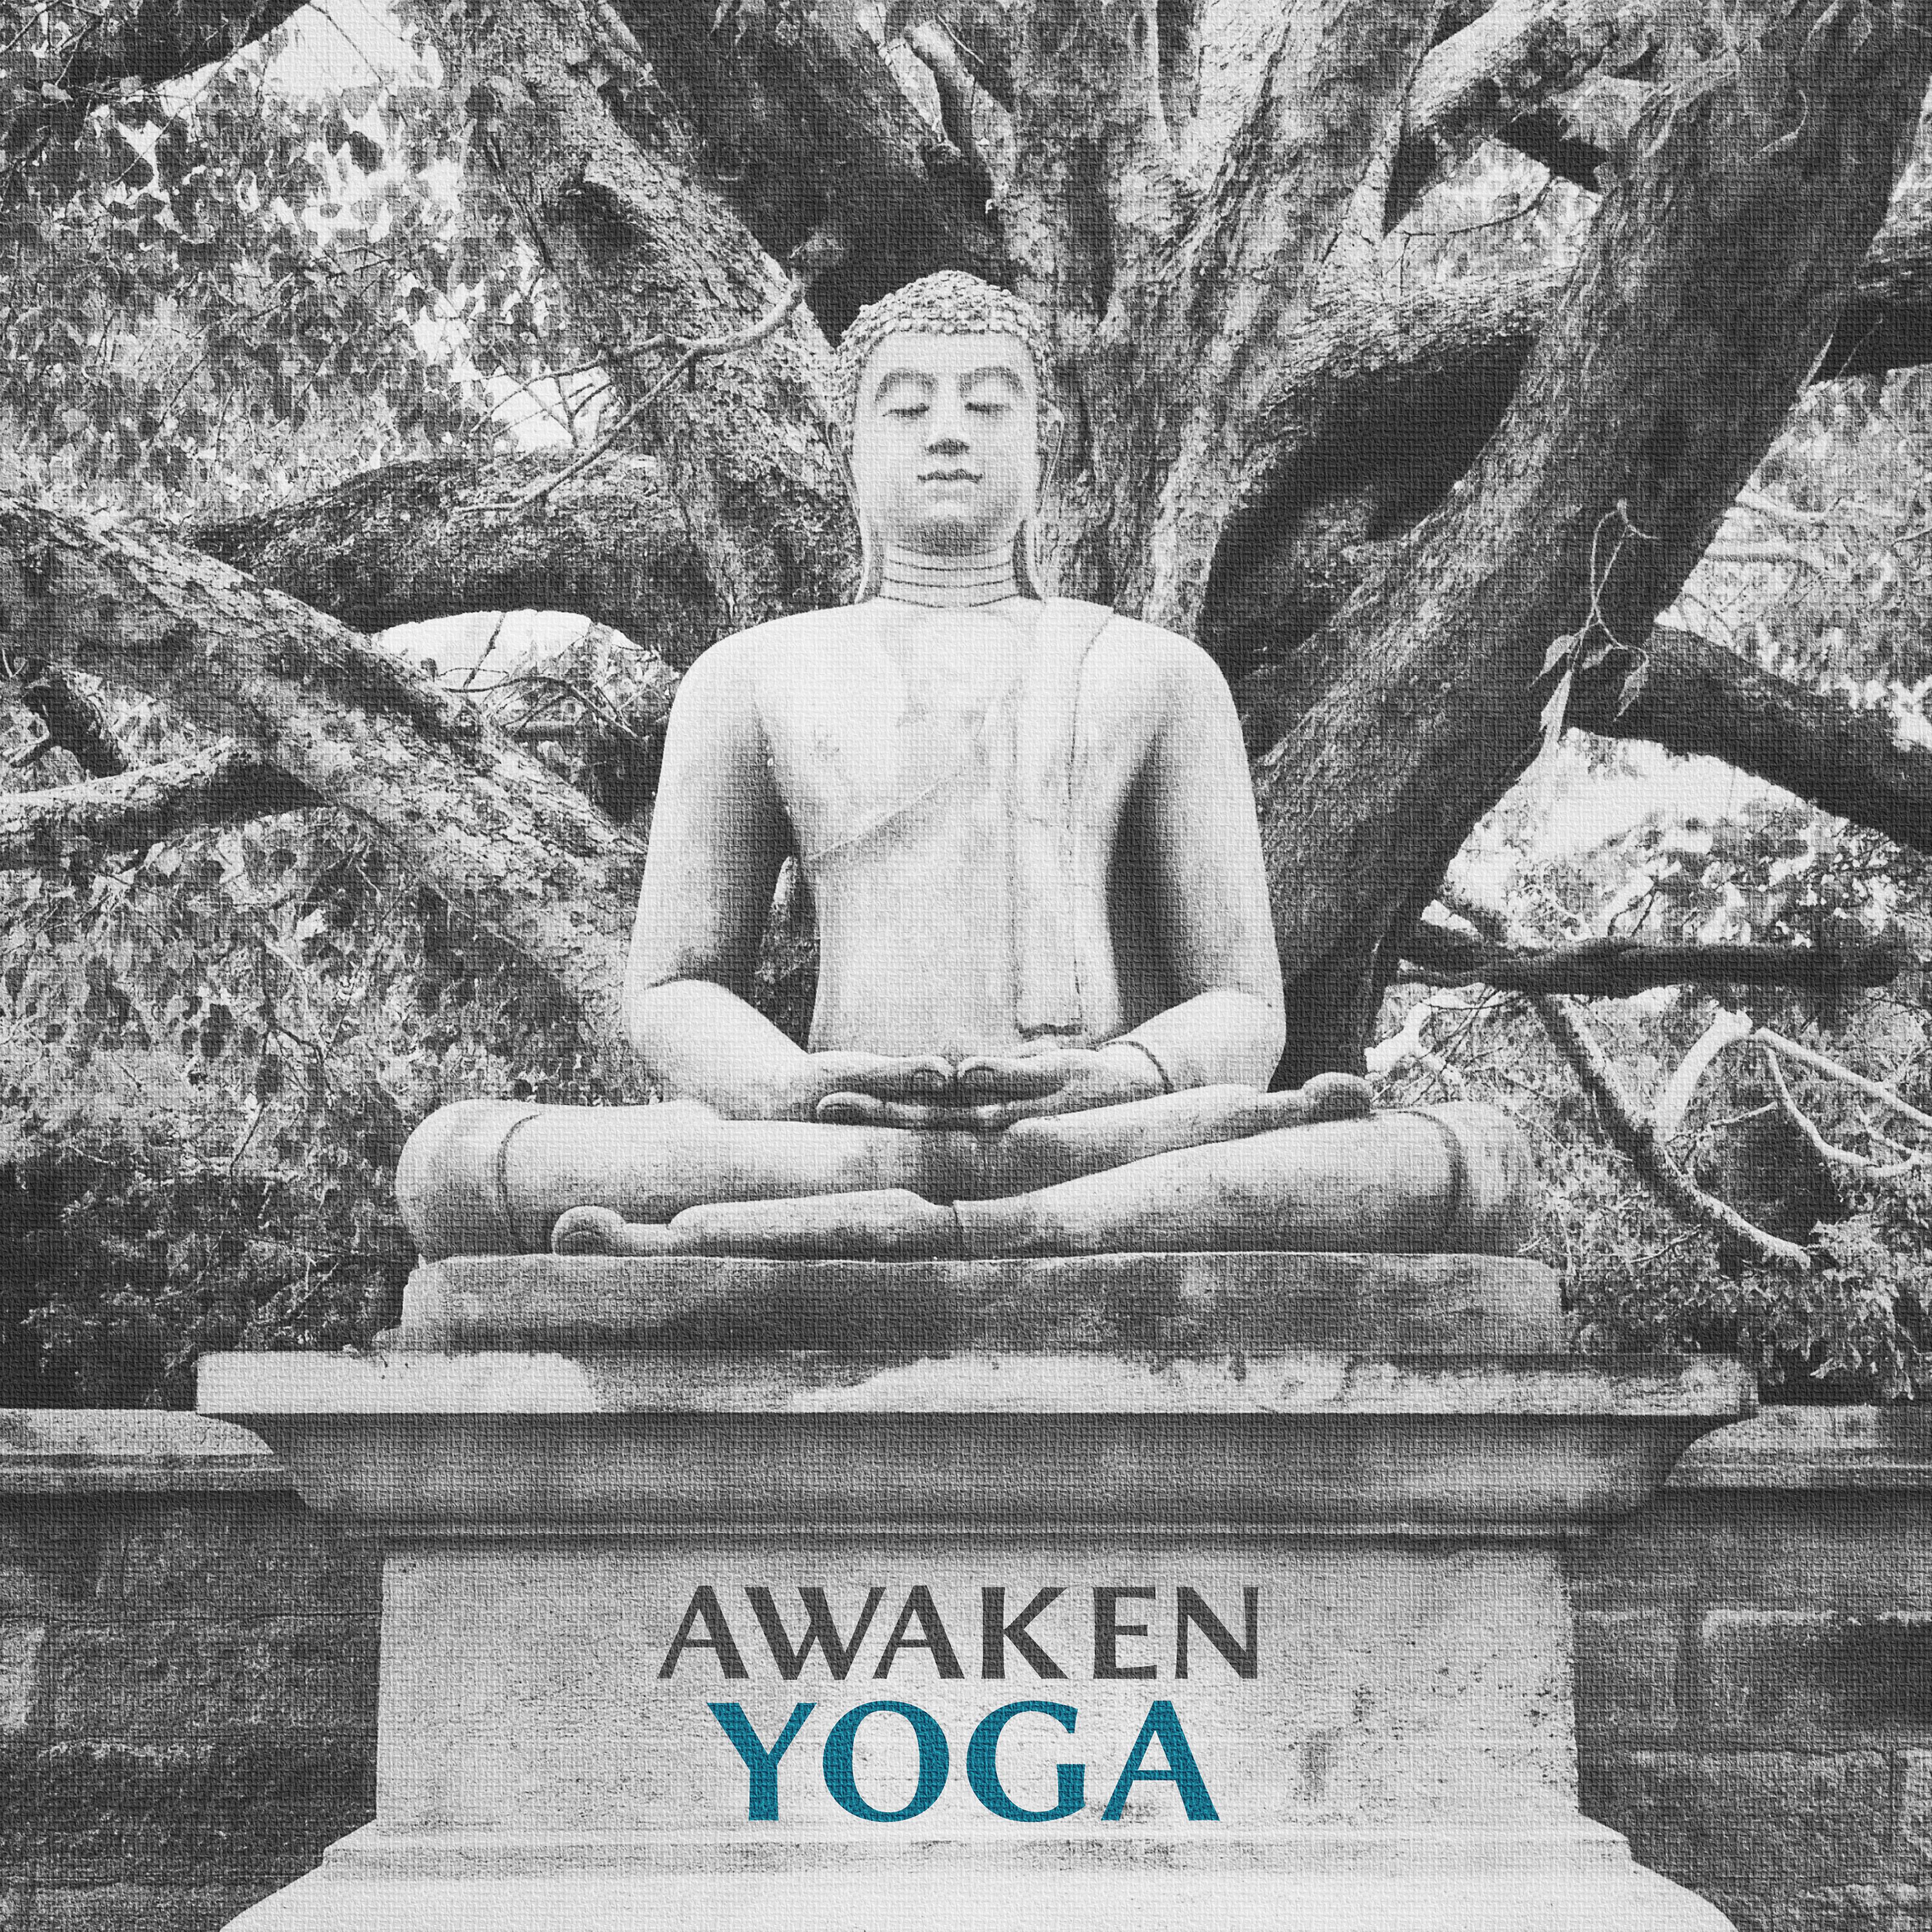 Awaken Yoga– Relaxation Music for Yoga, Meditation, Calmimg Sounds of Nature, Yoga Music, Deep Meditation Music